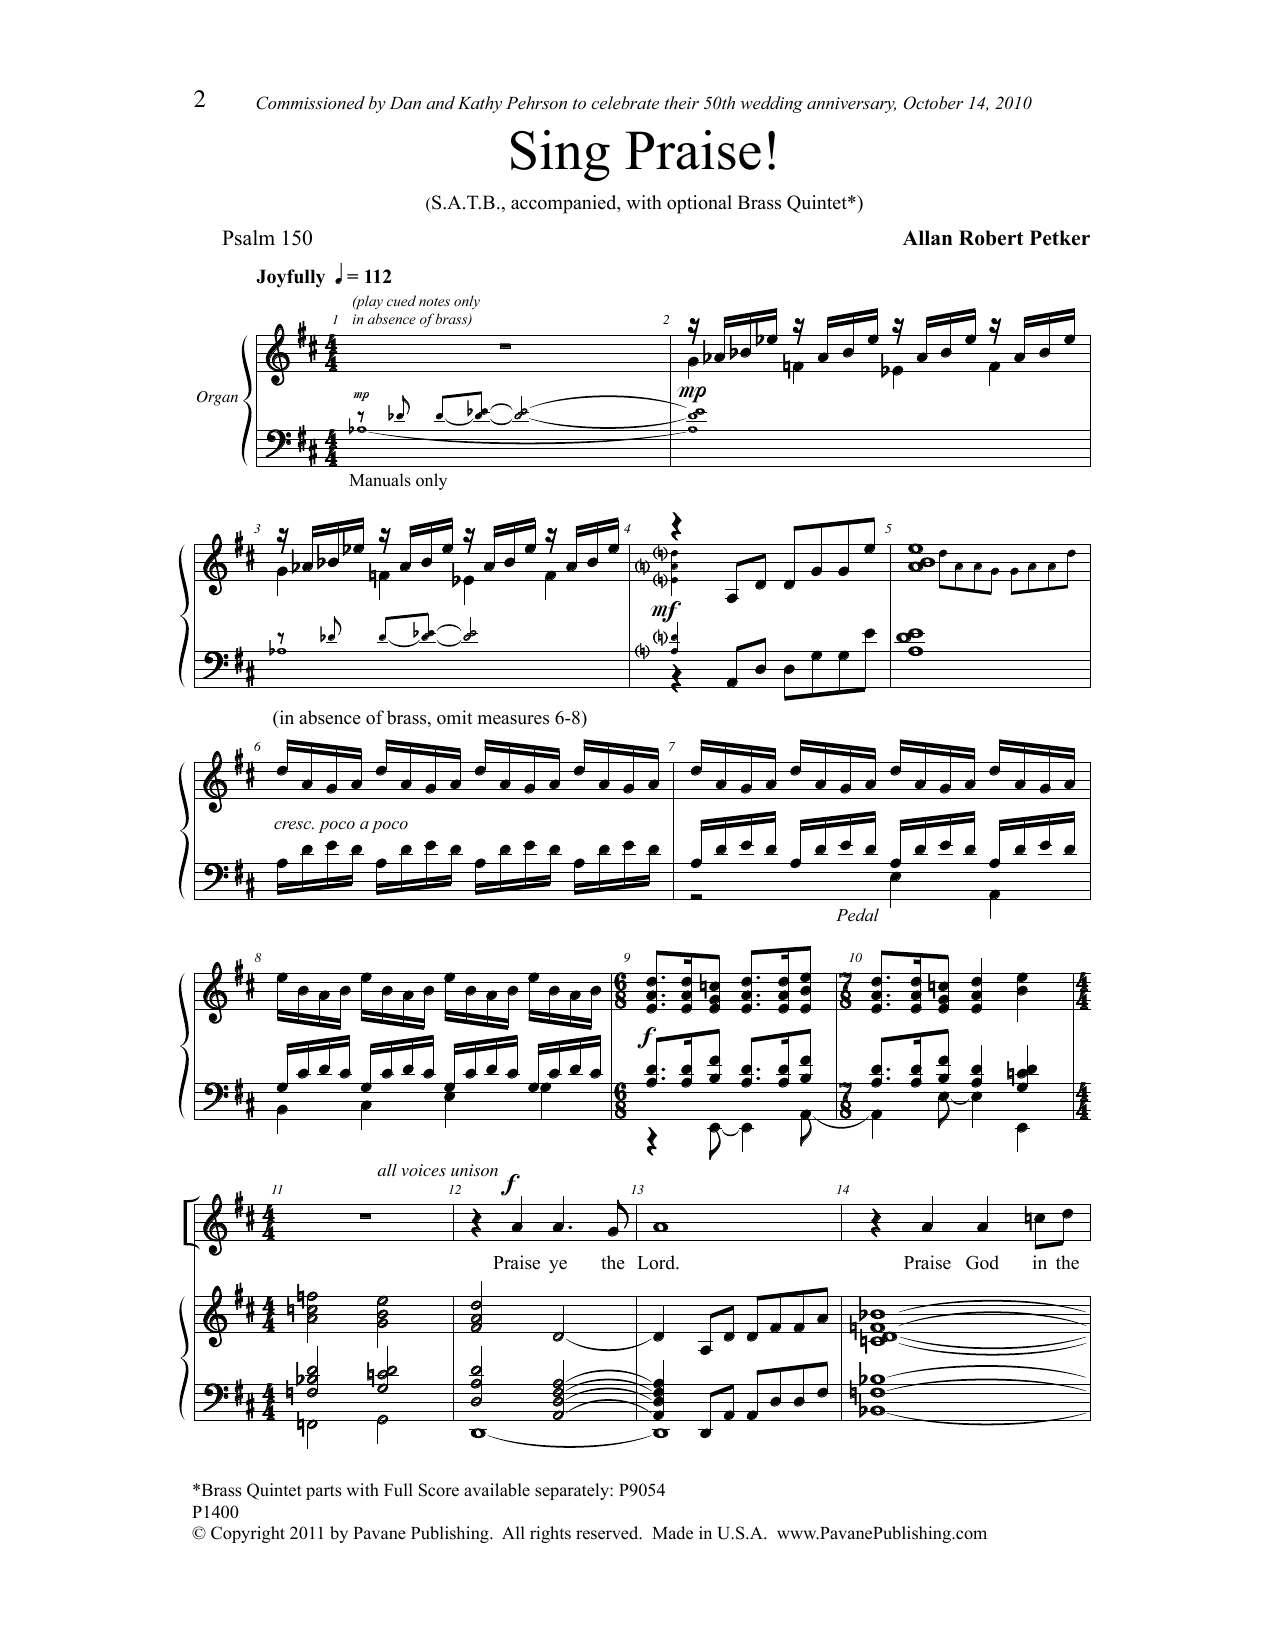 Allan Robert Petker Sing Praise! sheet music notes and chords arranged for SATB Choir